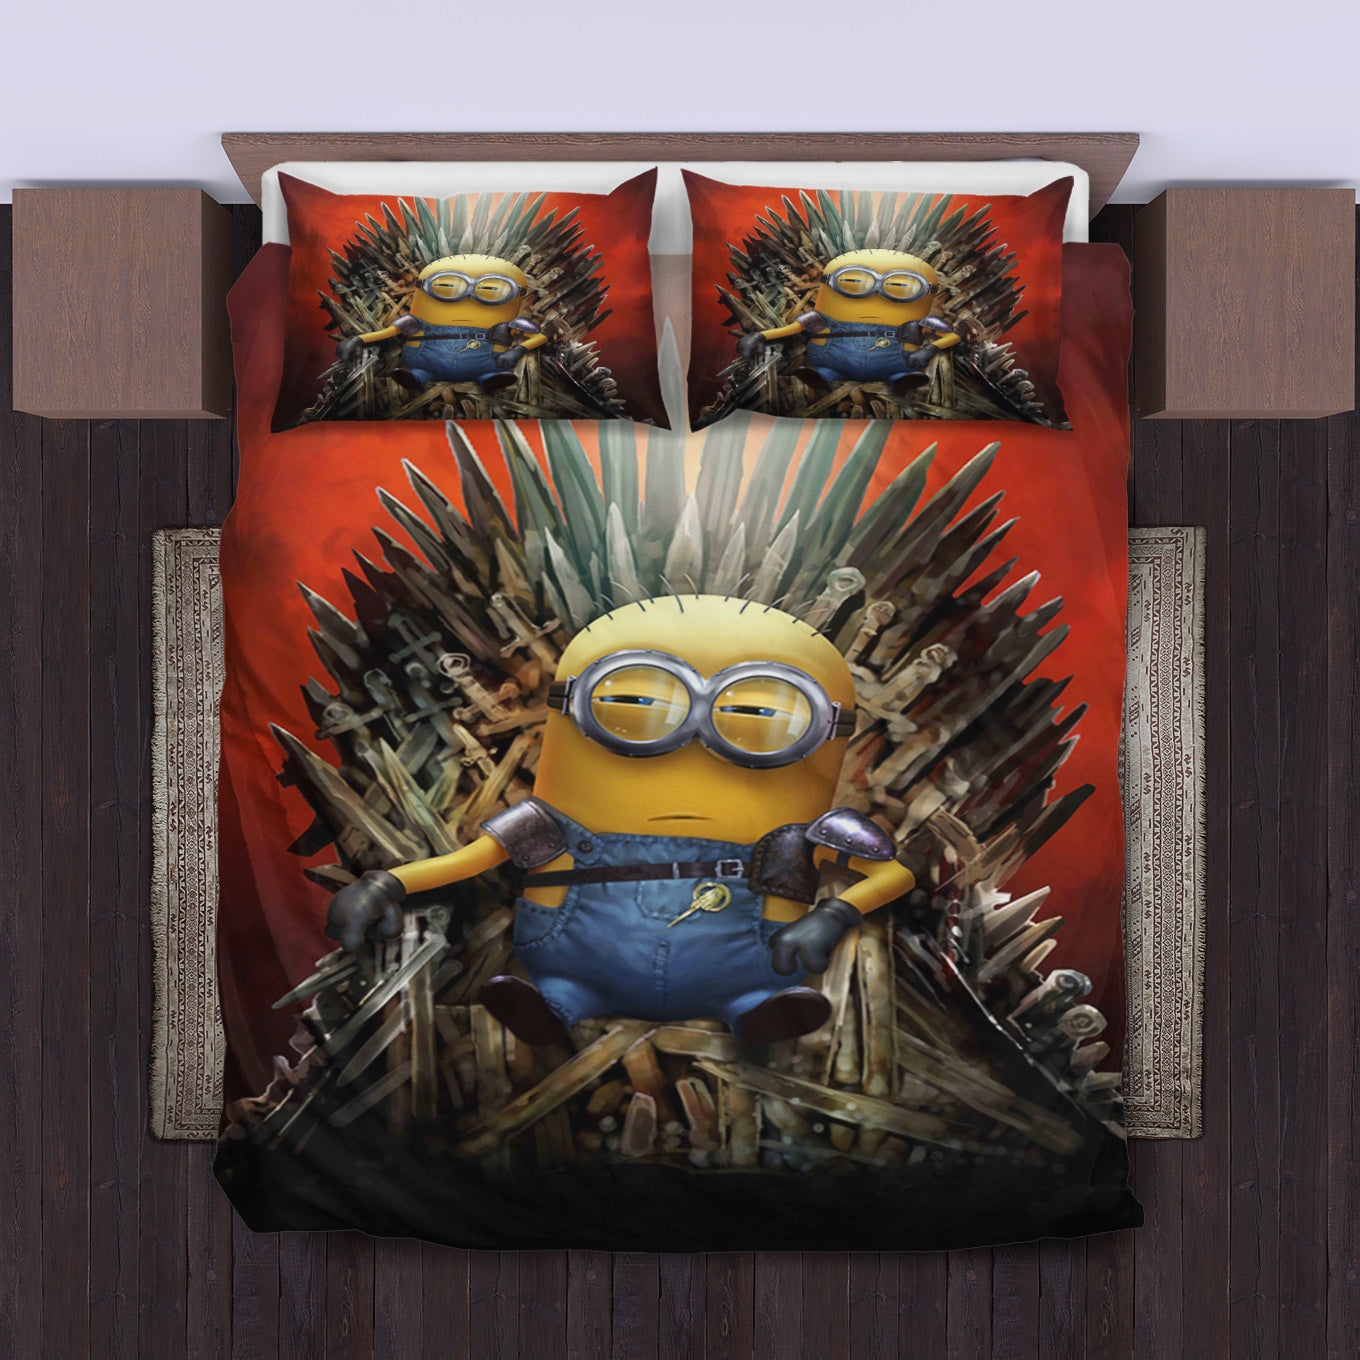 Minion Game Of Thrones Bedding Set Duvet Cover And Pillowcase Set